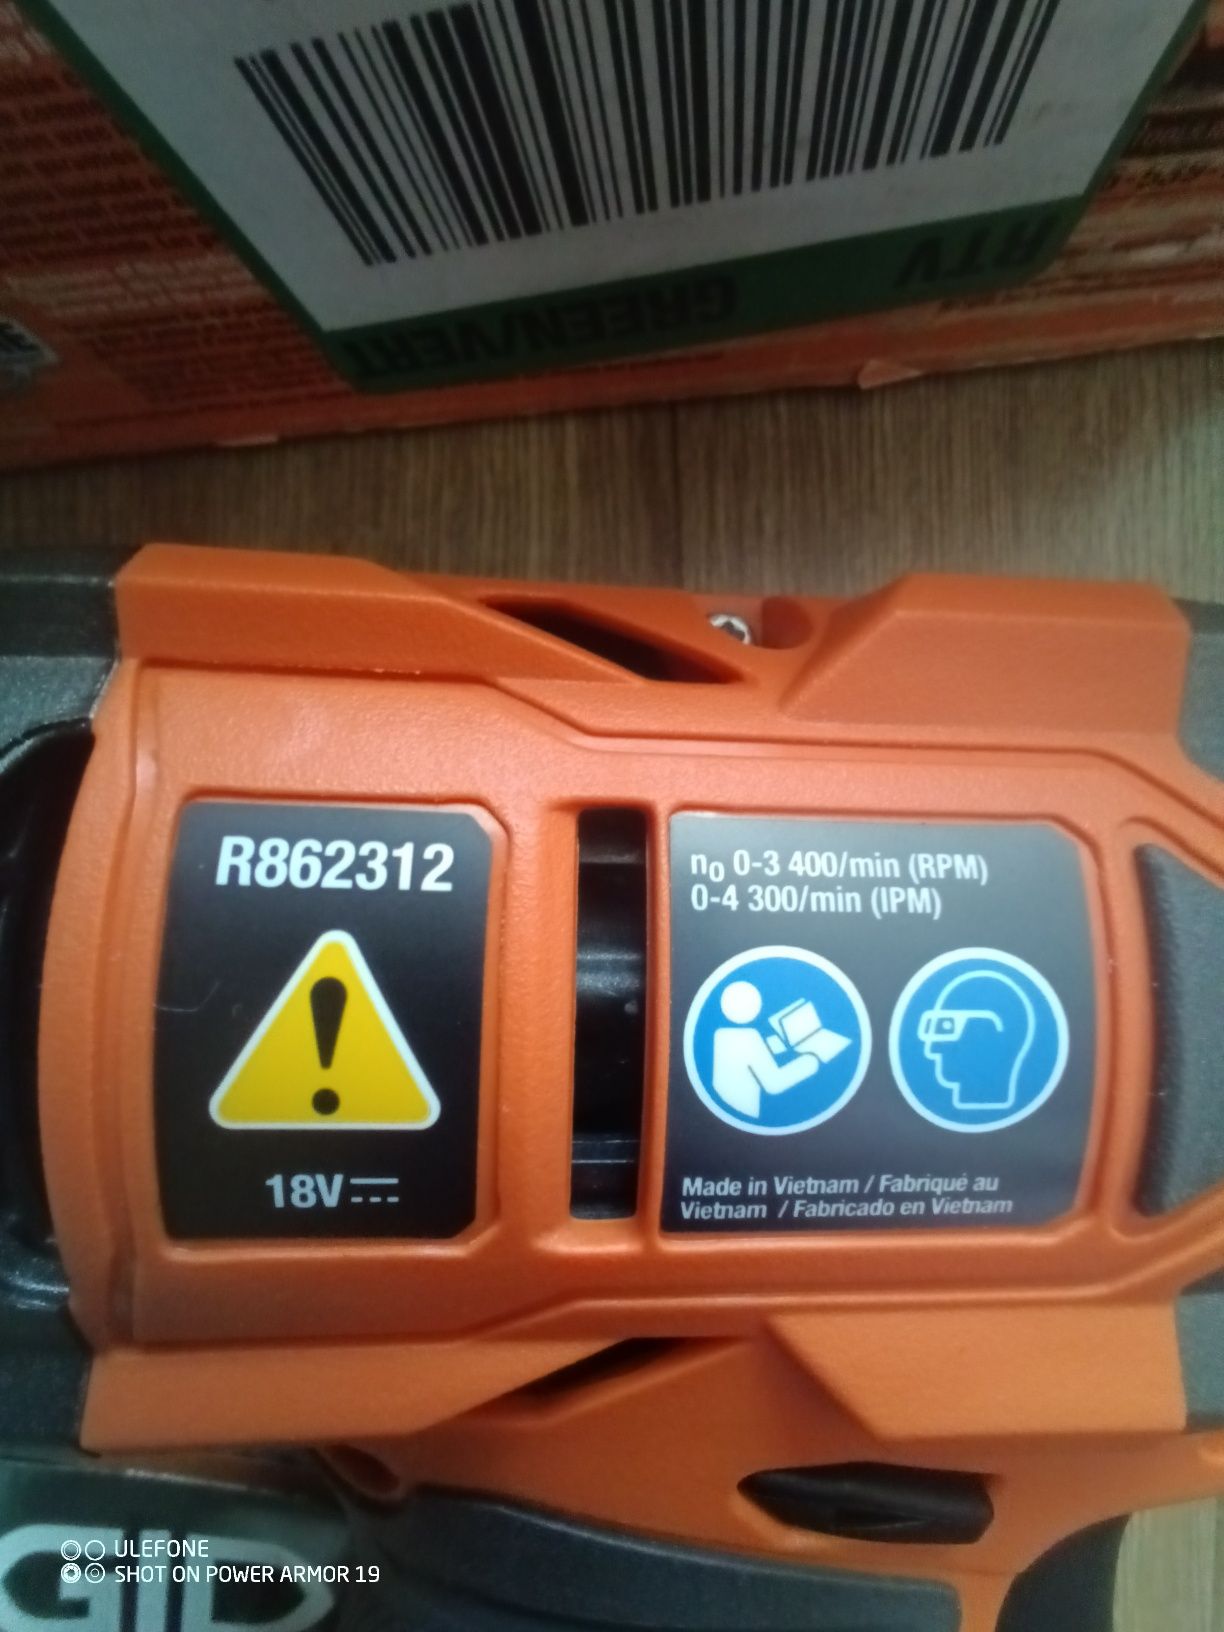 Ridgid R862312 18V Brushless Impact Driver